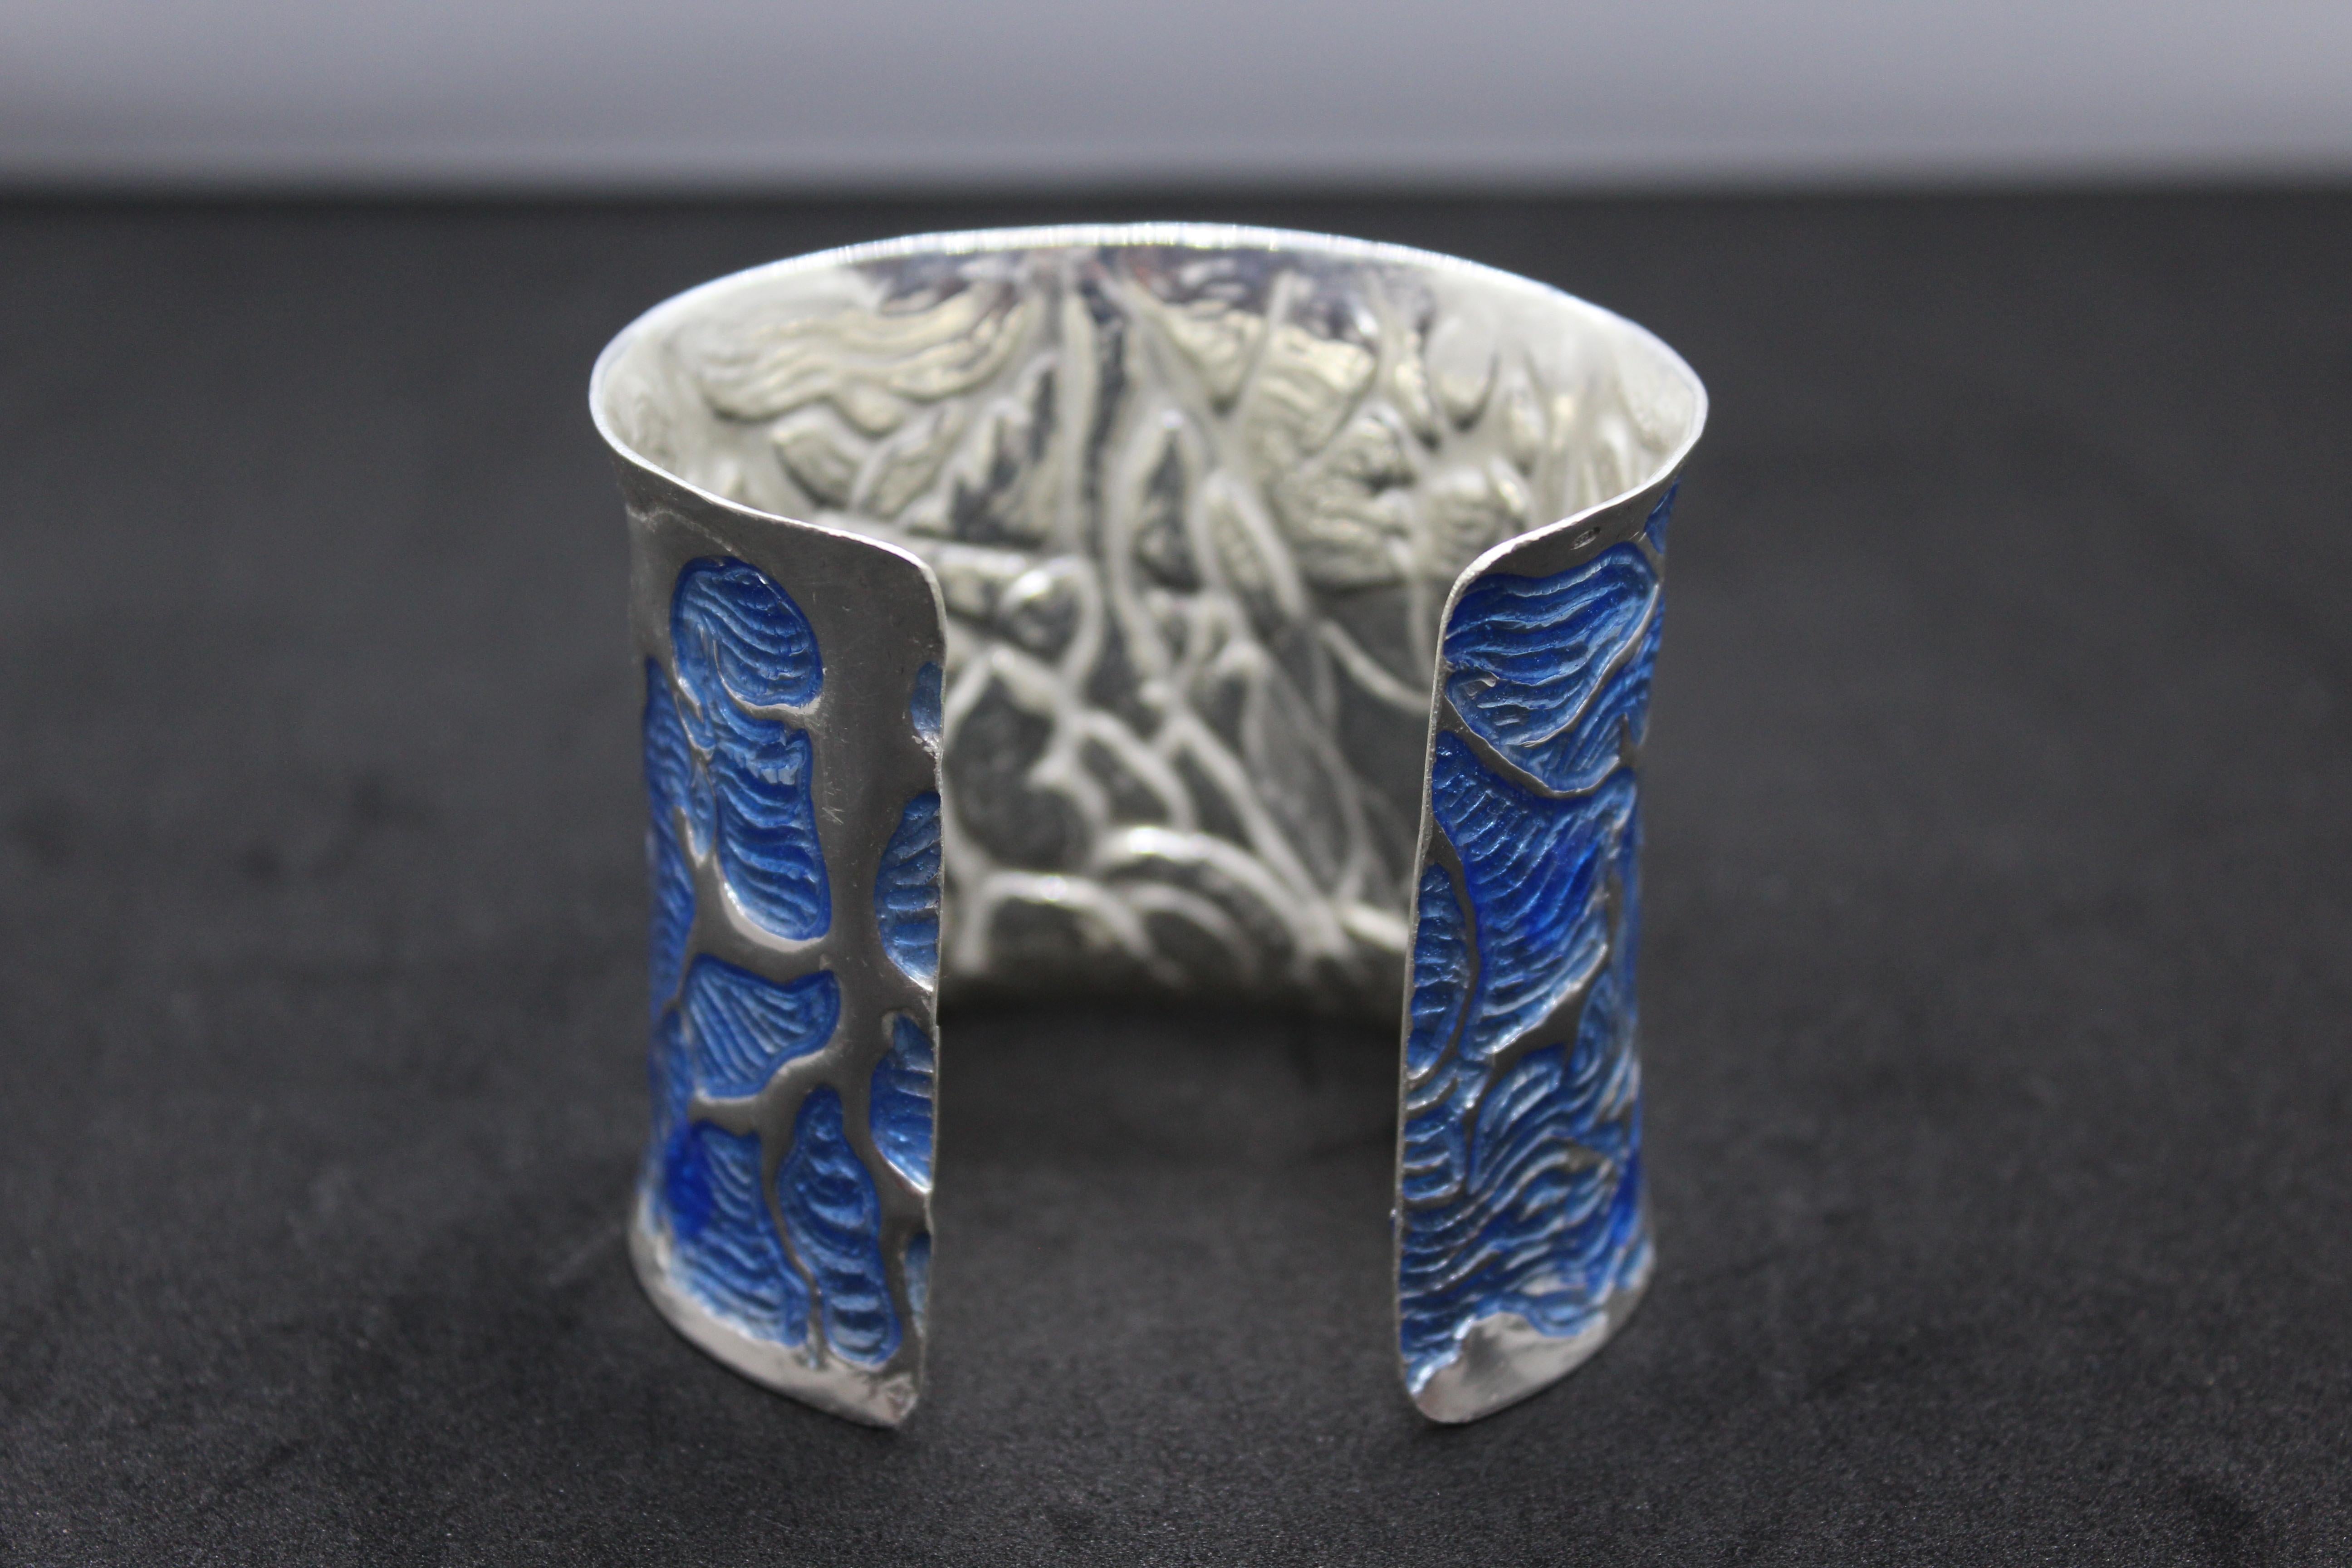 Schiava Blue Coral Bracelet, Sterling Silver, Handmade, Italy For Sale 2